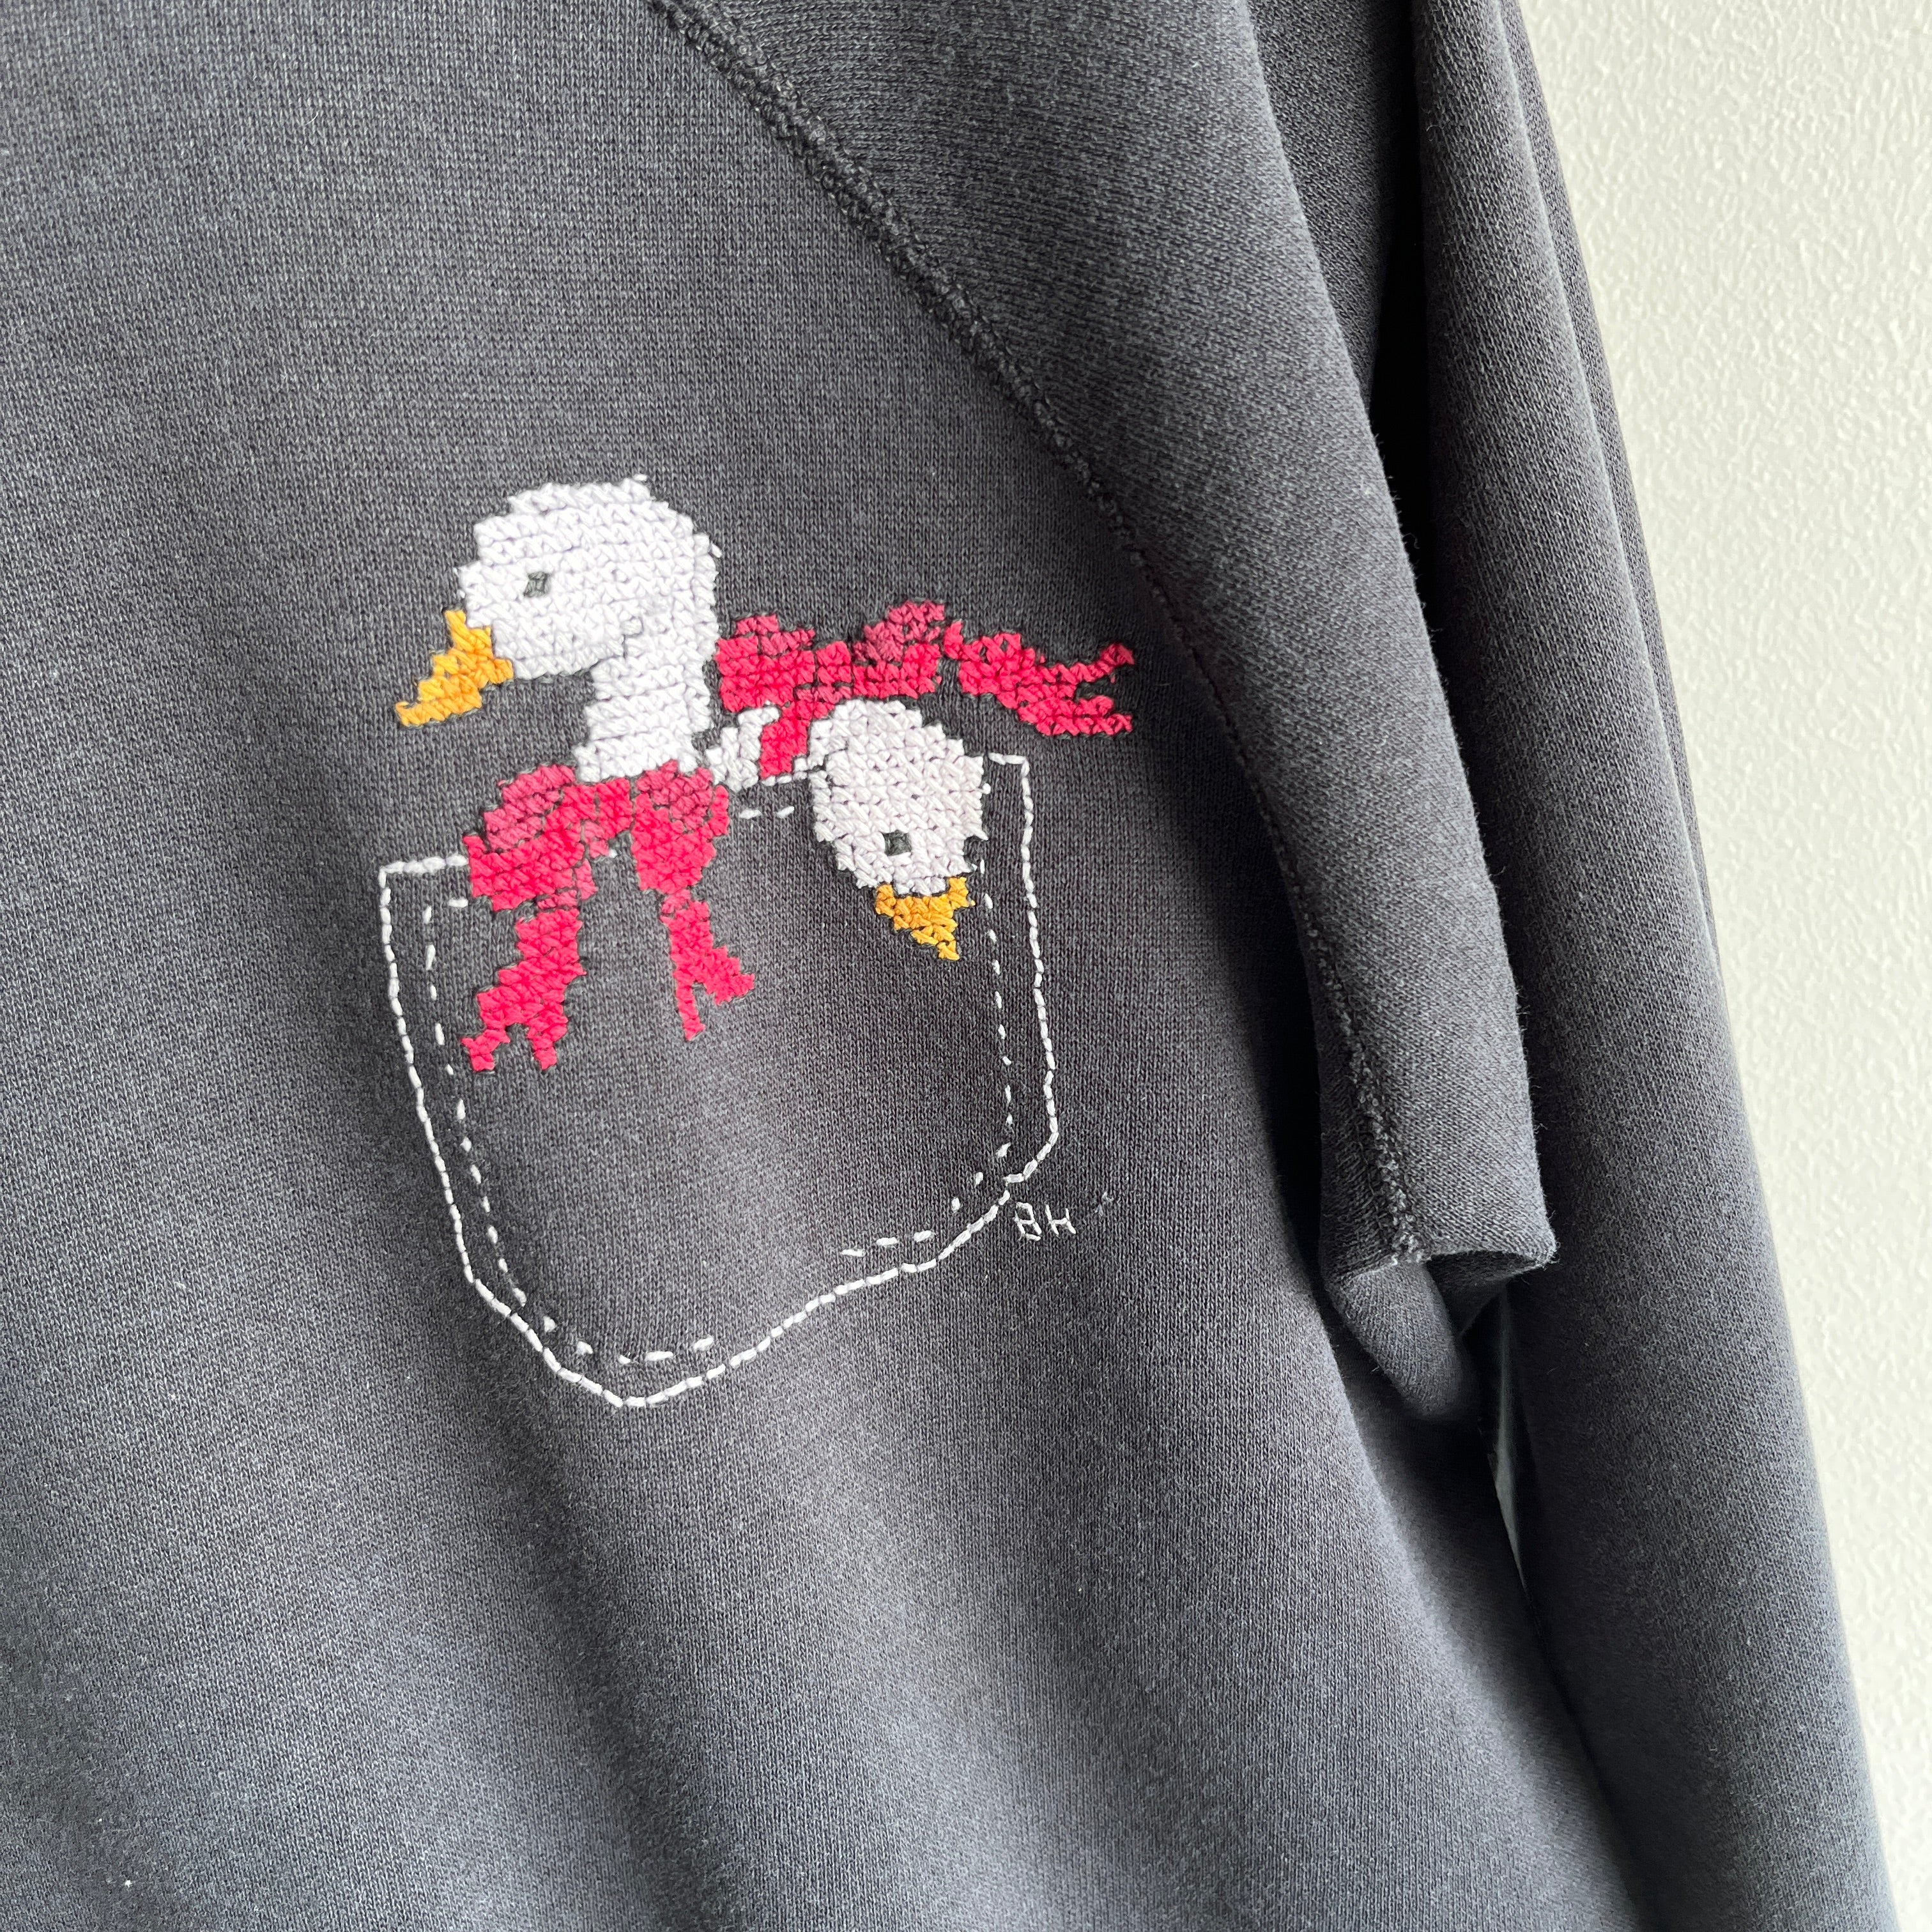 1980s Geese in a Pocket DIY Needlepoint Sweatshirt